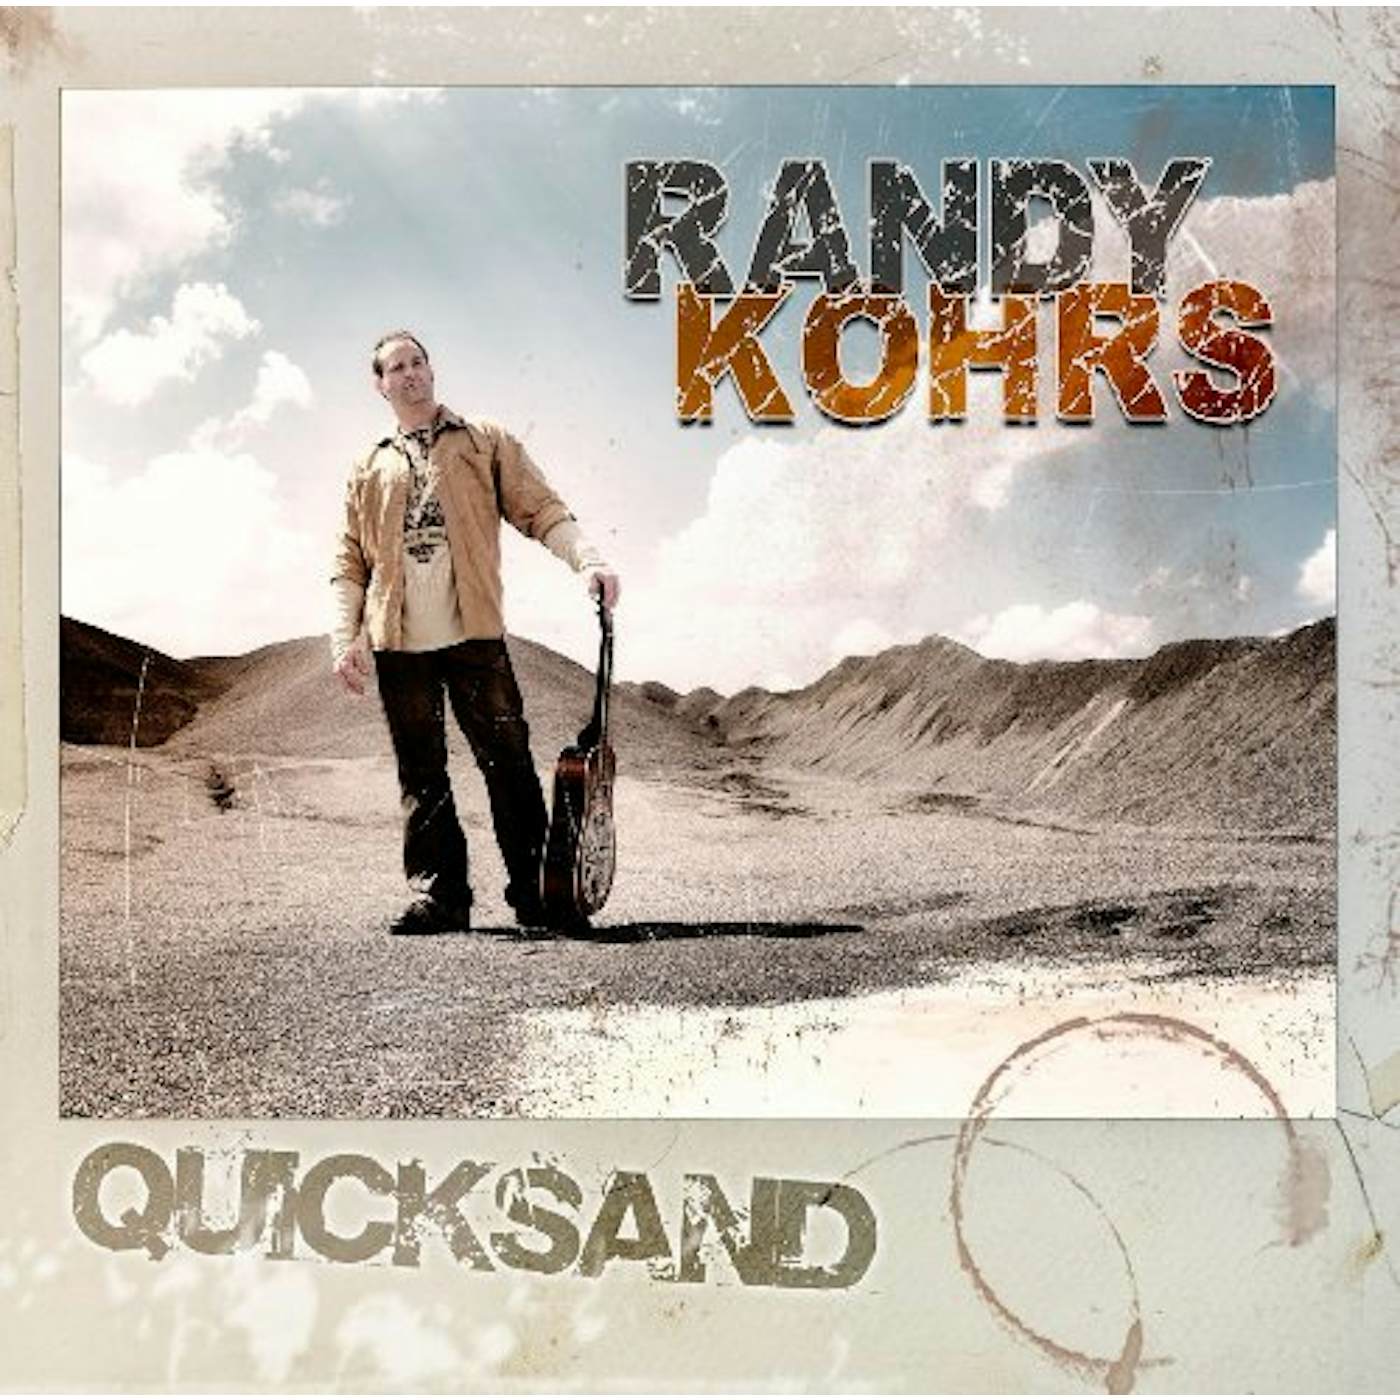 Randy Kohrs QUICKSAND CD